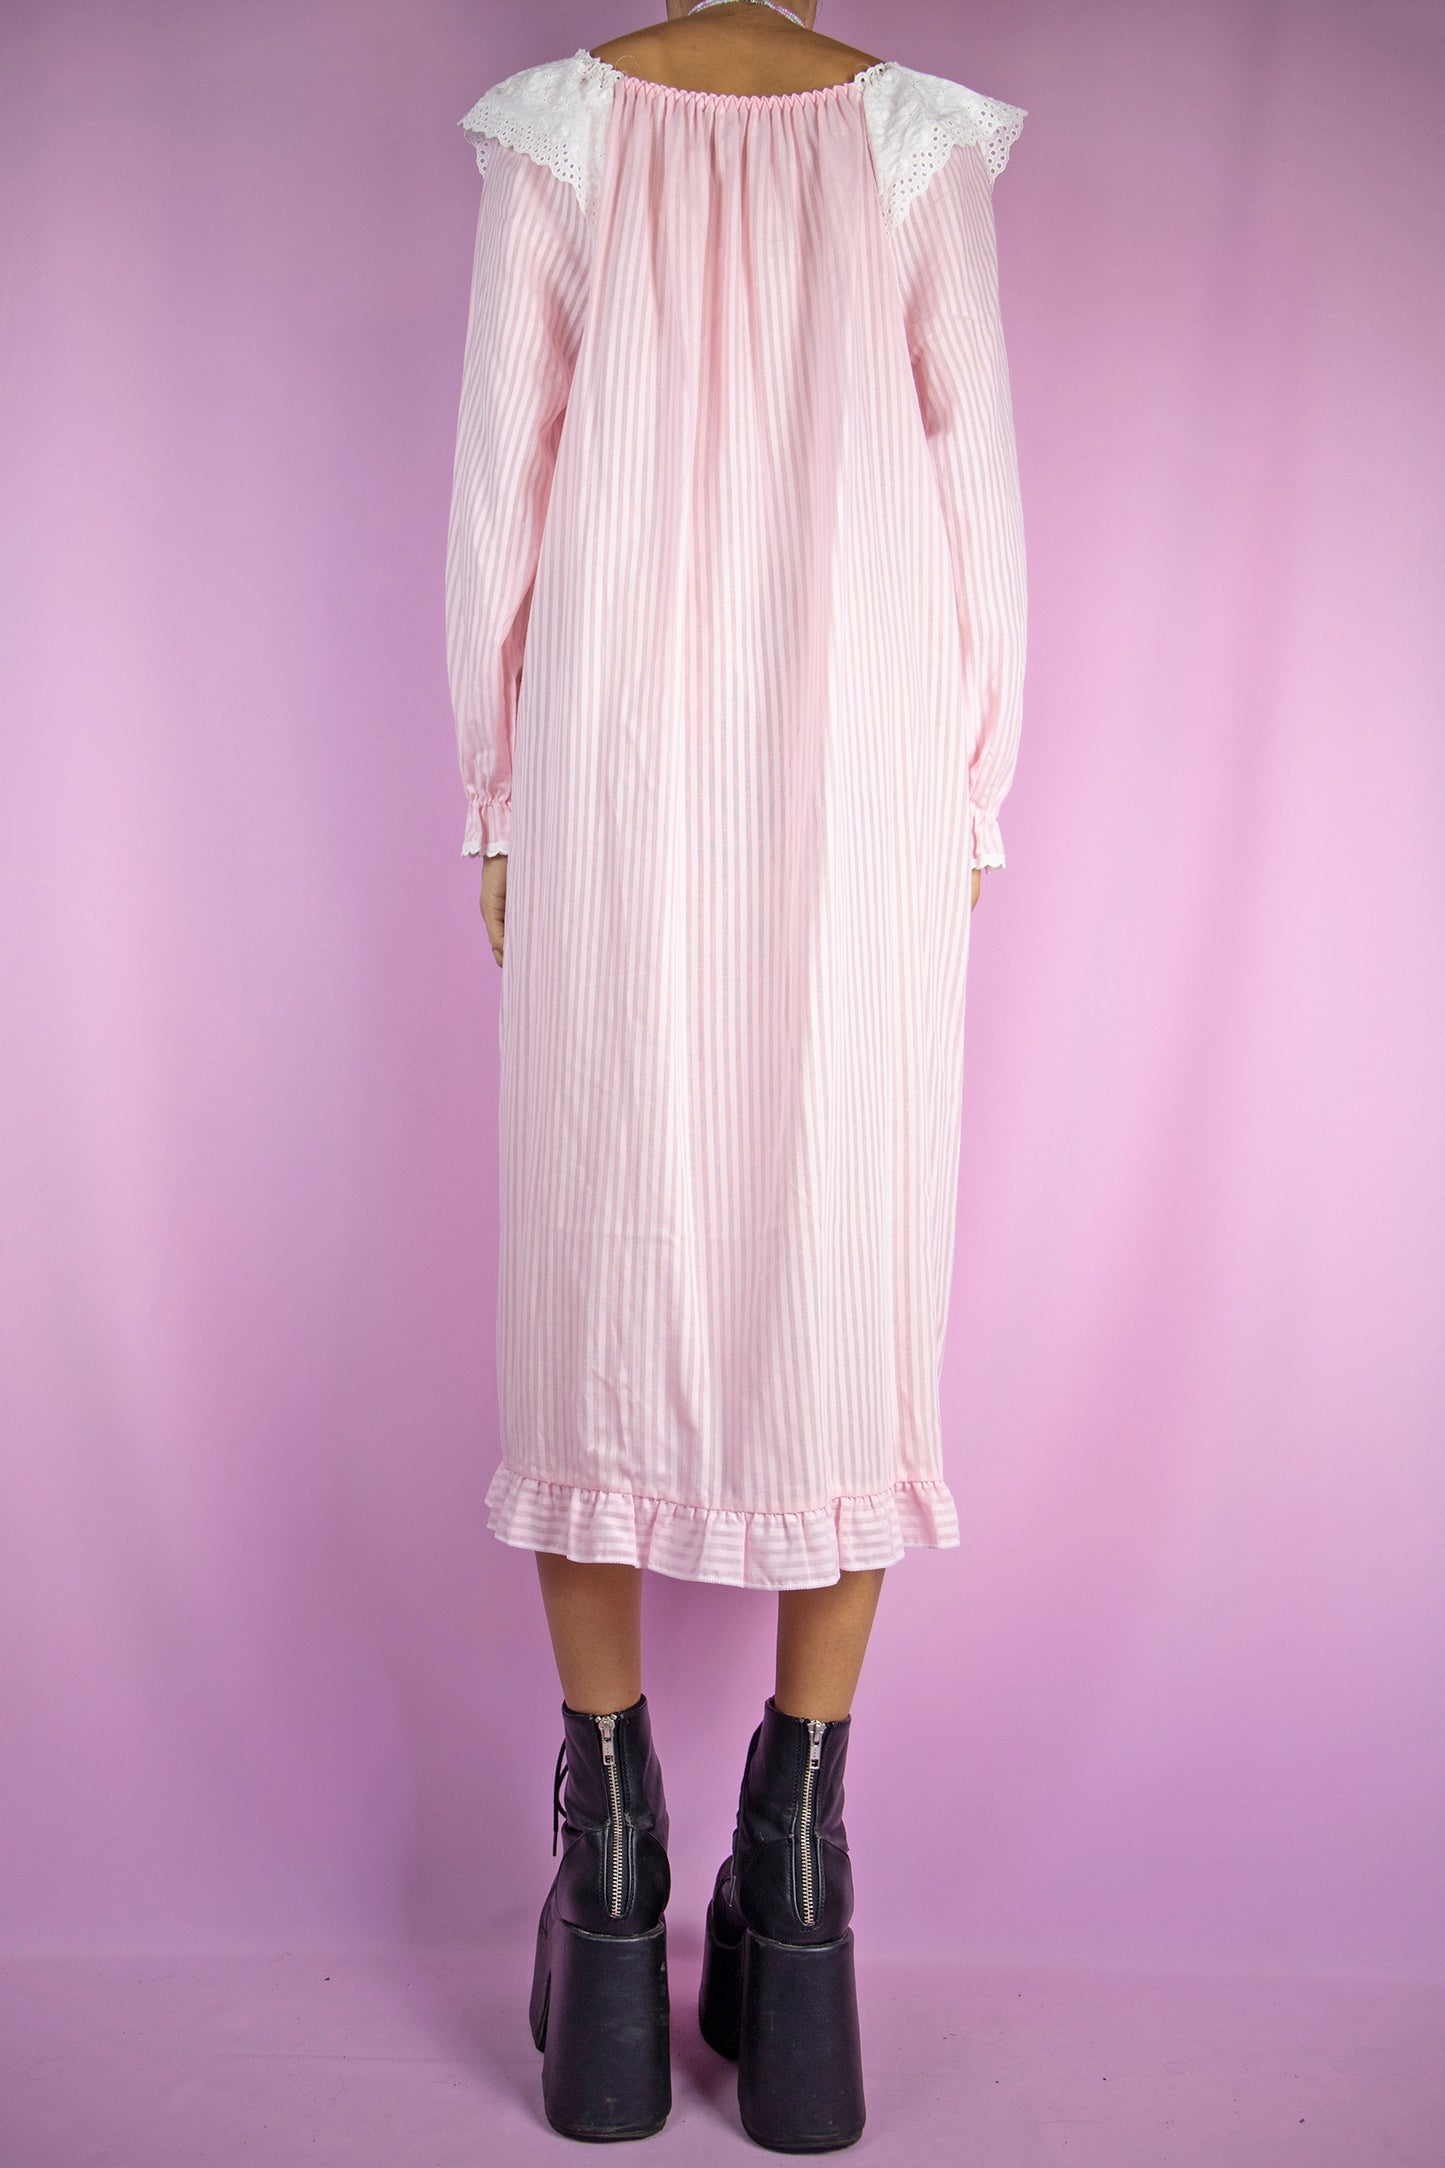 Vintage 80s Pink Striped Nightgown Dress - M/L